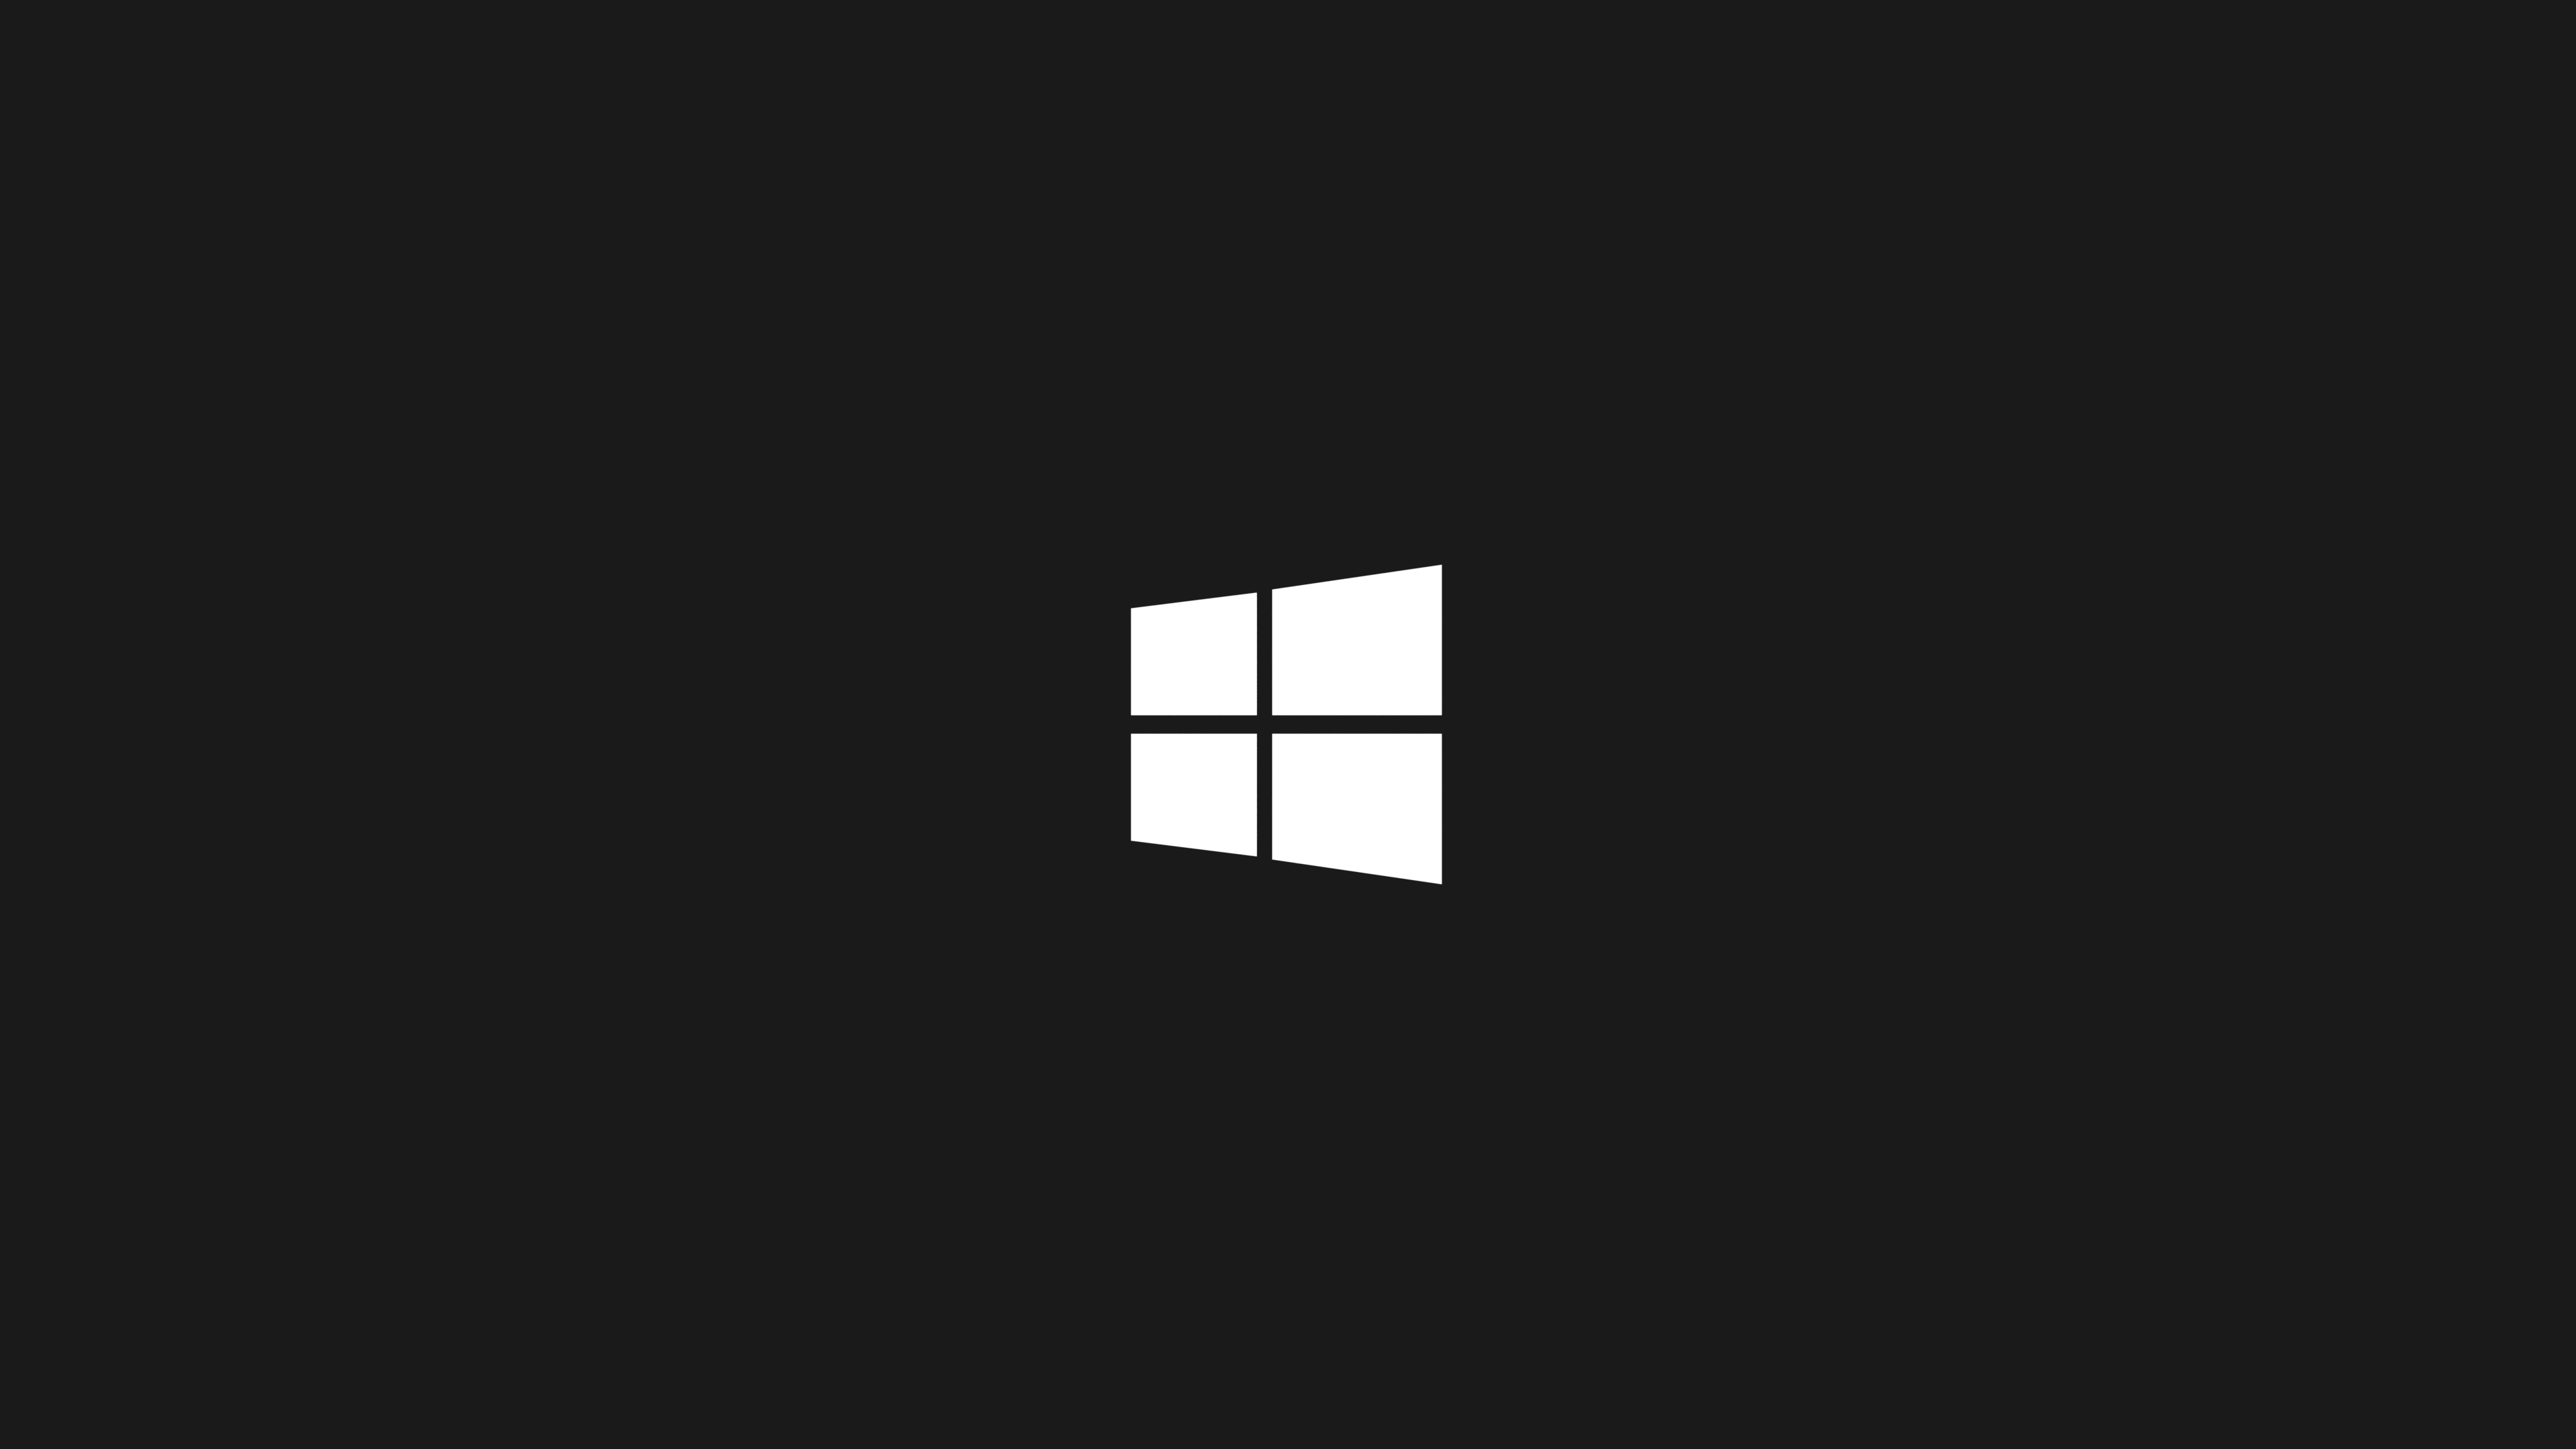 Tecnología Windows Fondo de pantalla HD | Fondo de Escritorio